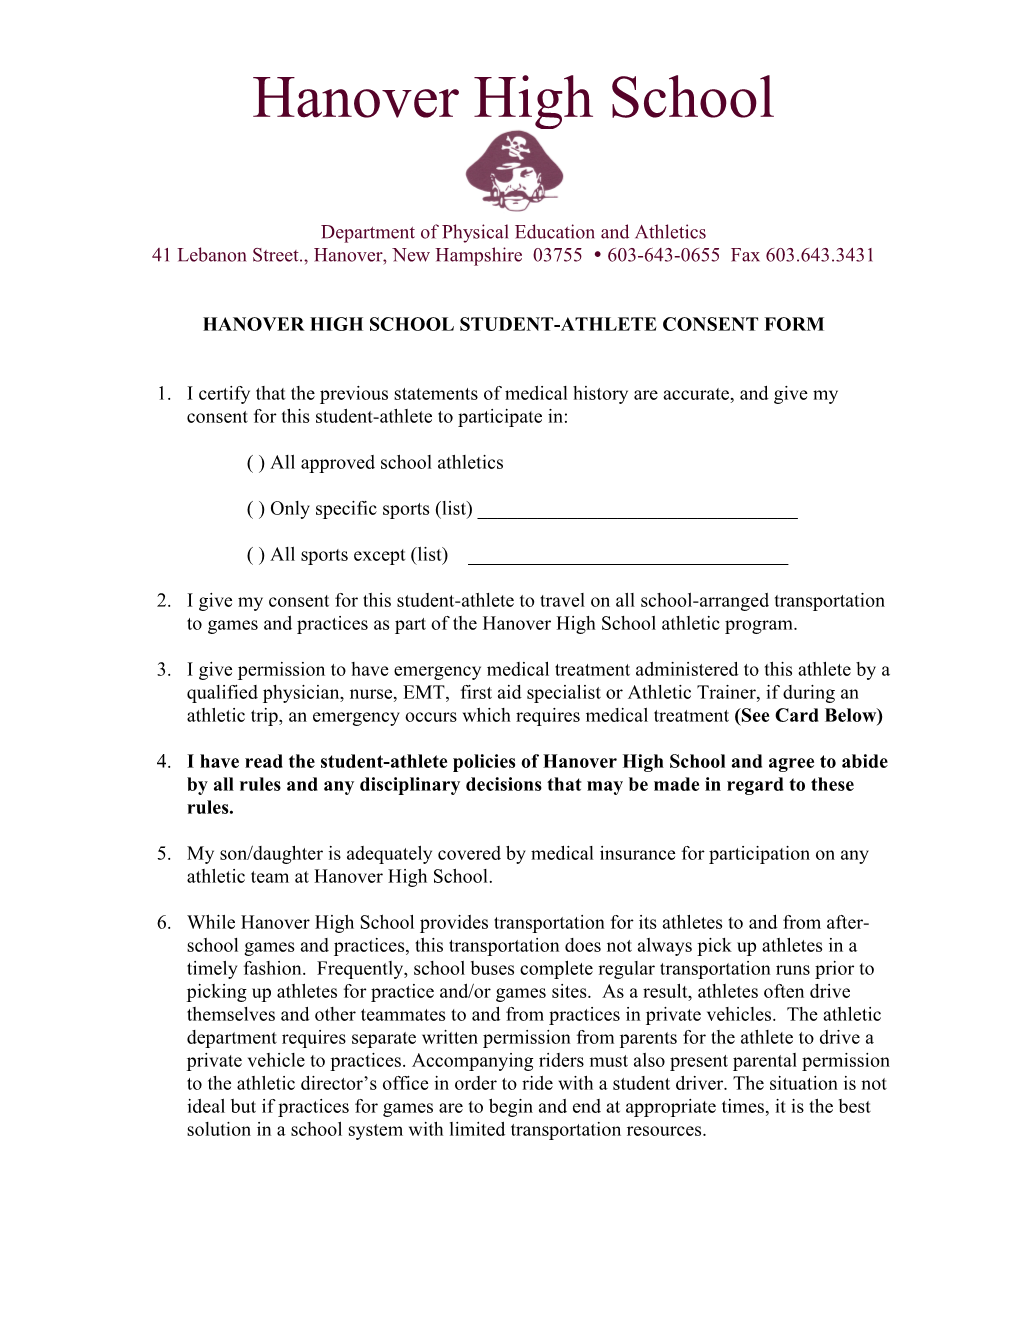 Hanover High School Student-Athlete Consent Form